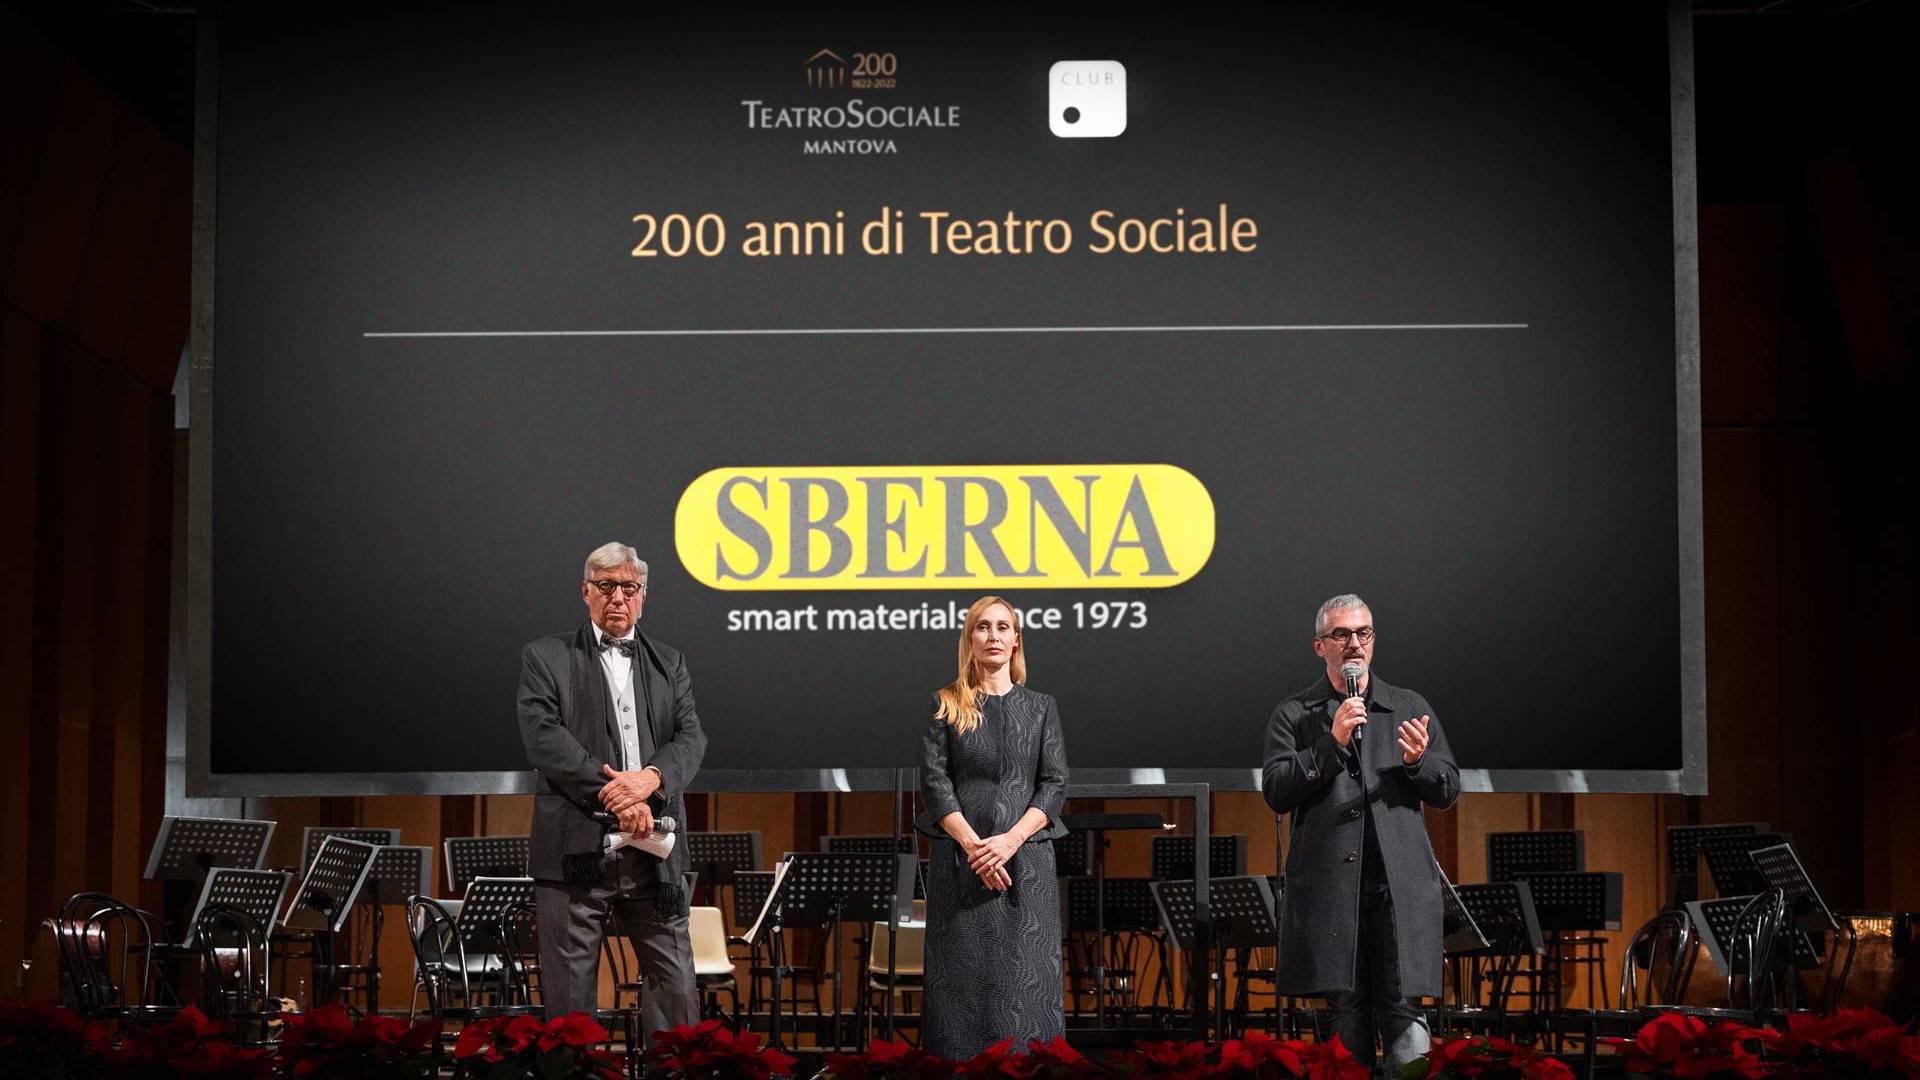 Teatro Sociale Mantova . Sberna . Siglacom Club Celebrazione Bicentenario